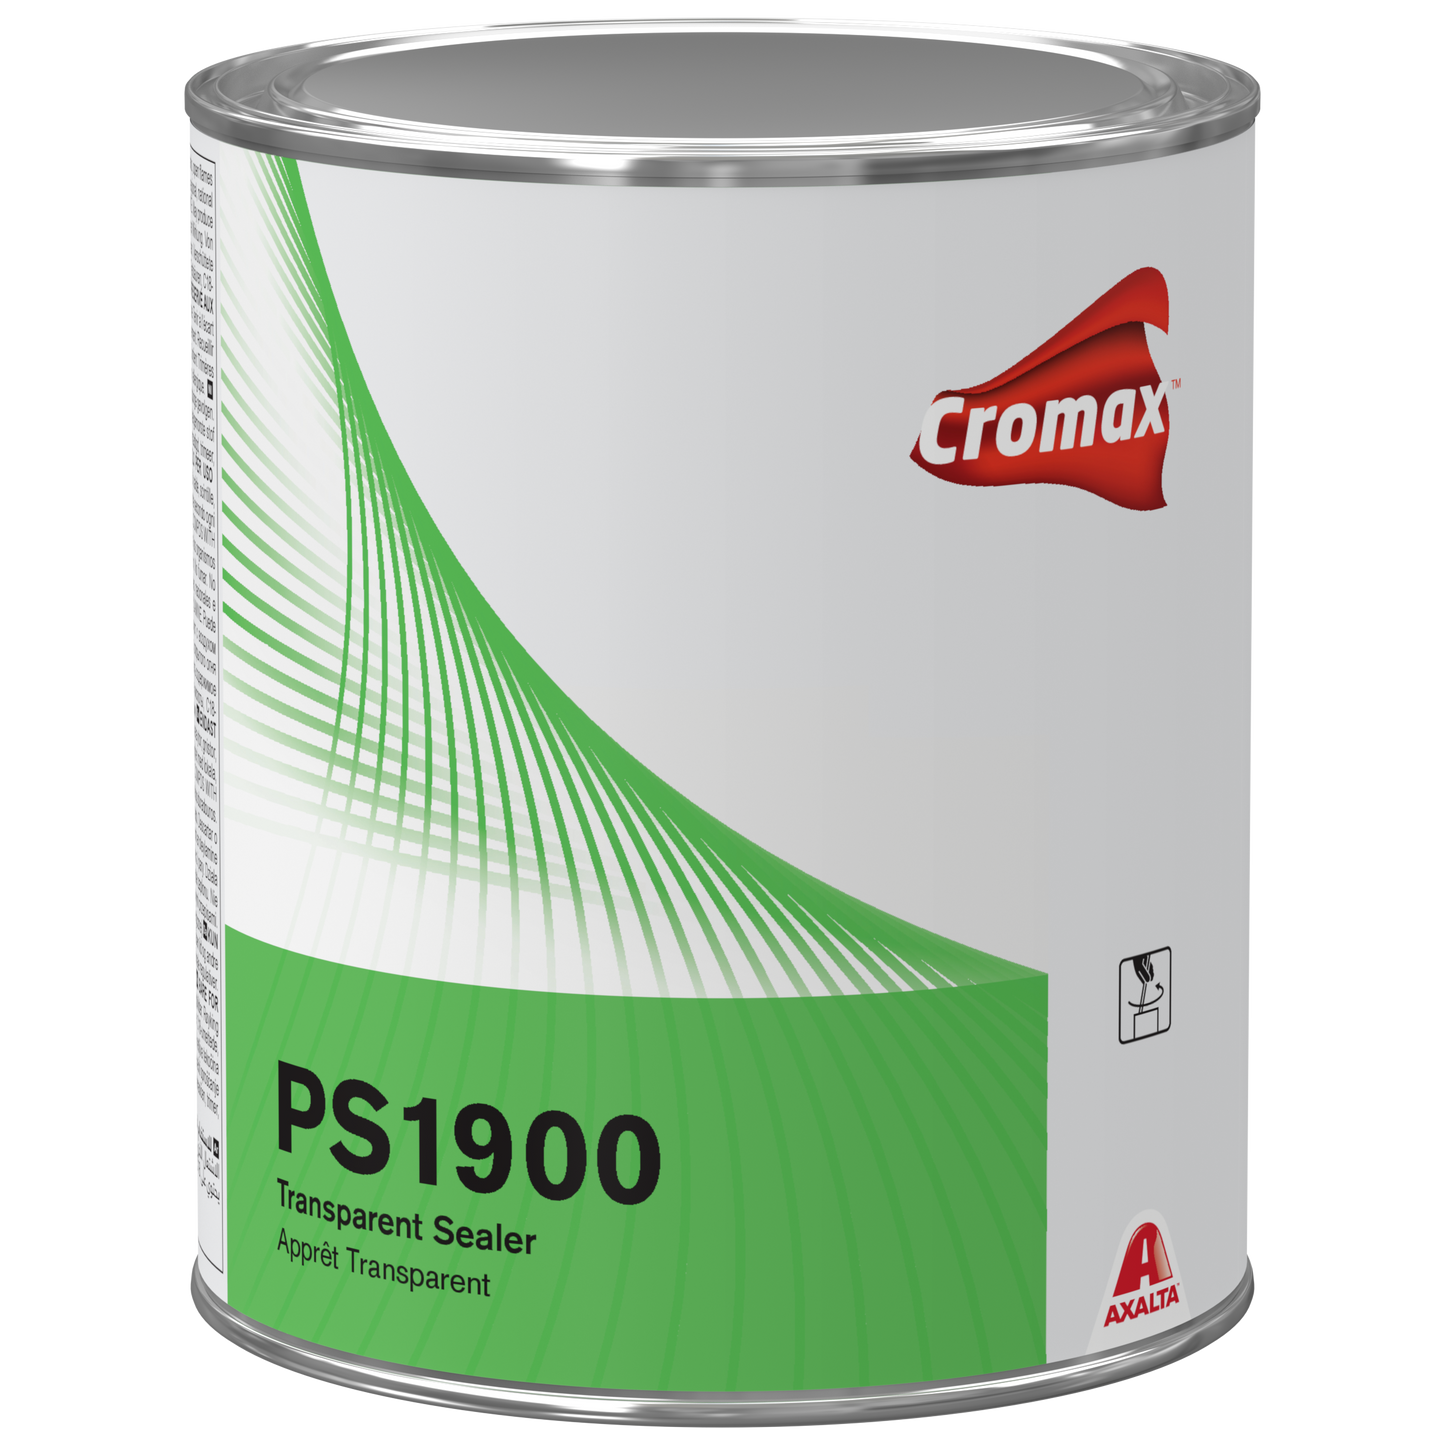 Cromax Transparent Sealer - 1 lit